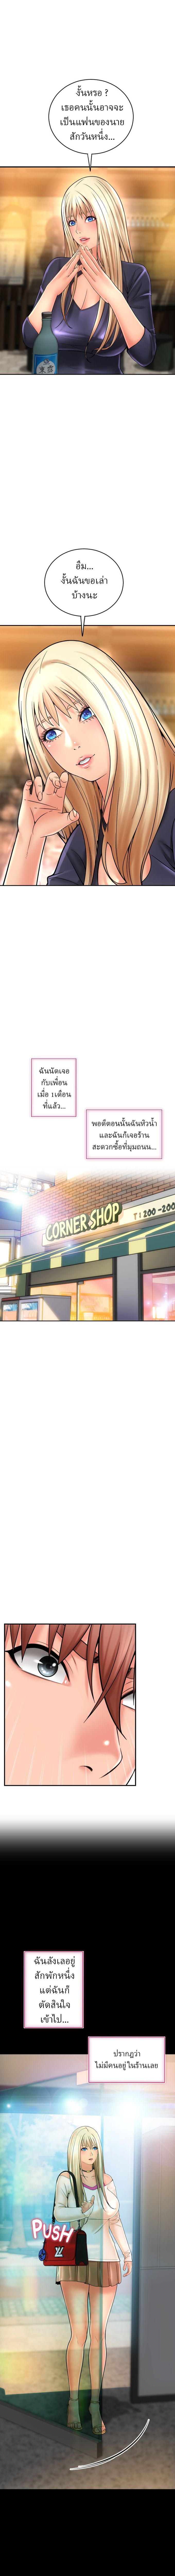 Corner Shop 19 14